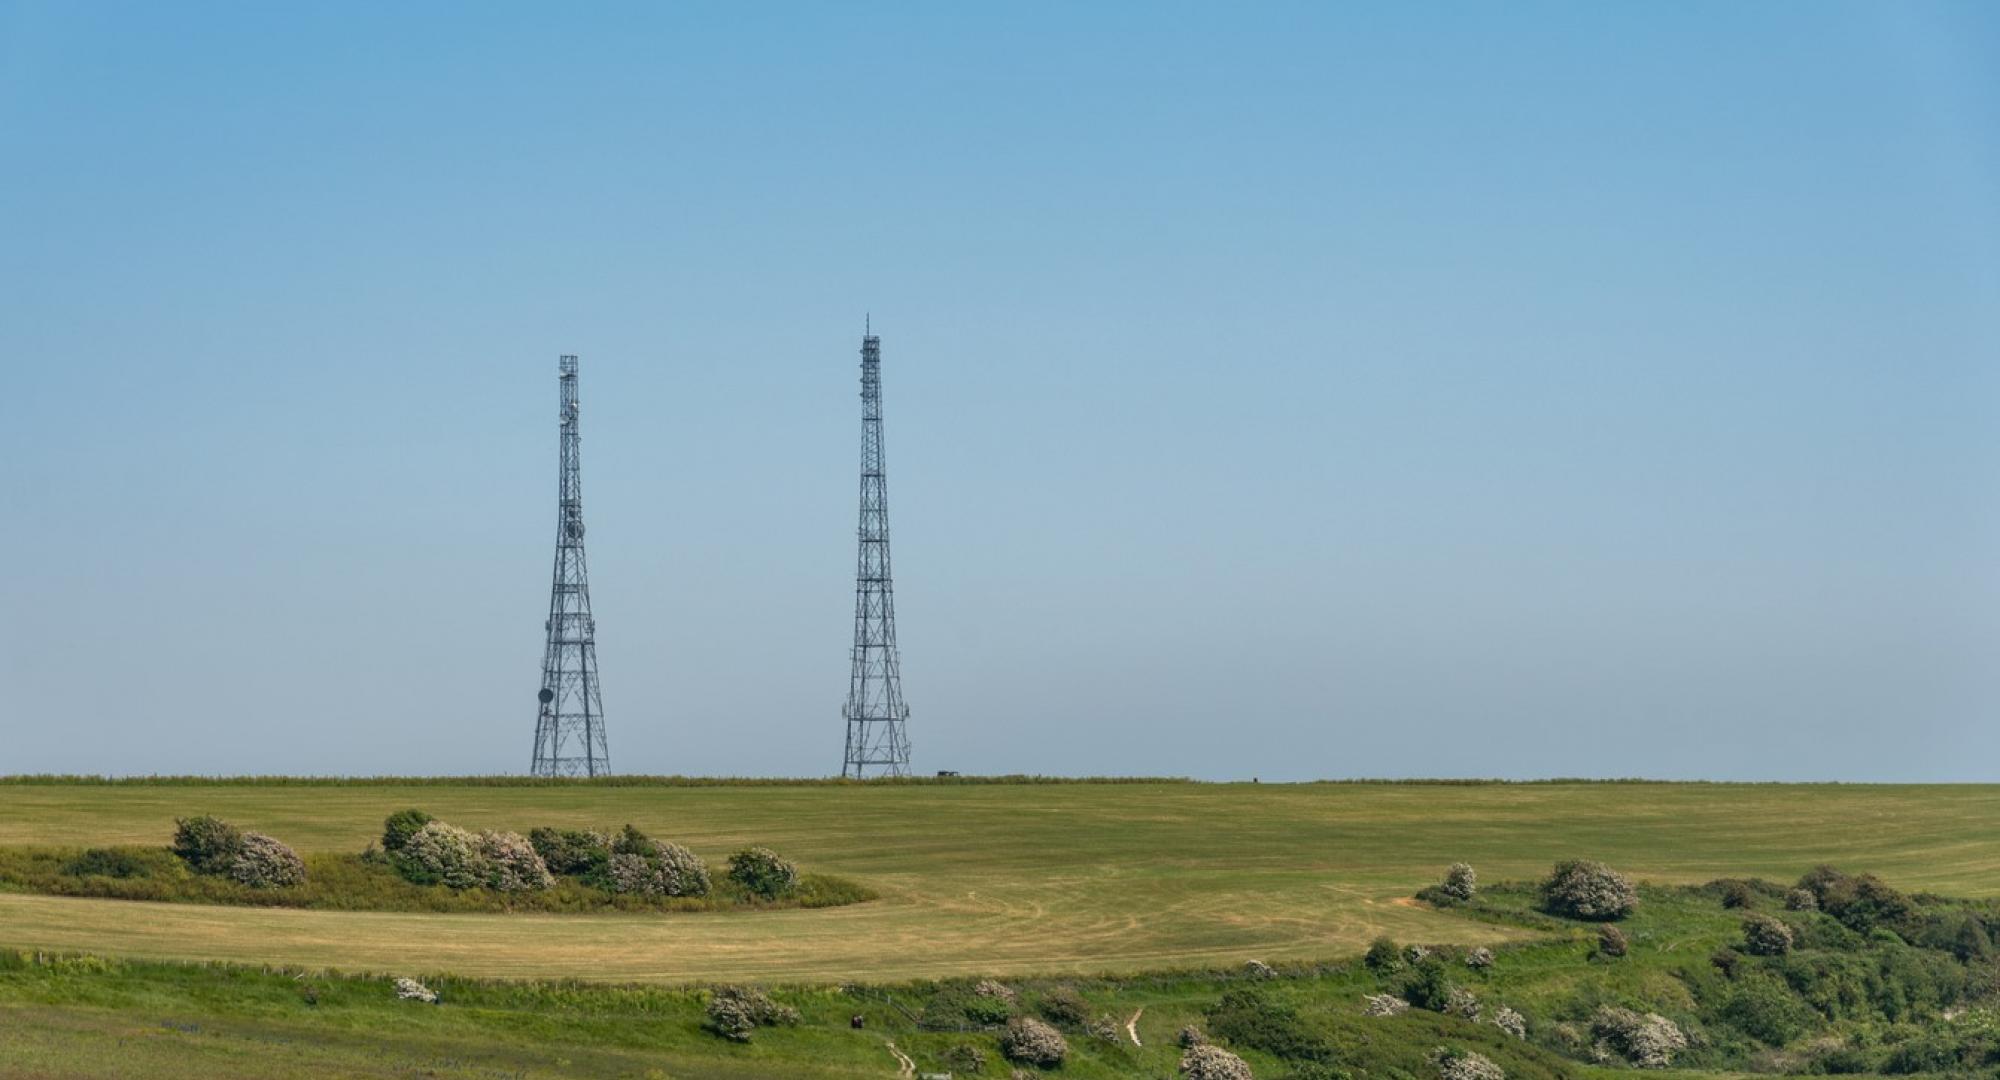 Antenna telecommunication against blue sky.